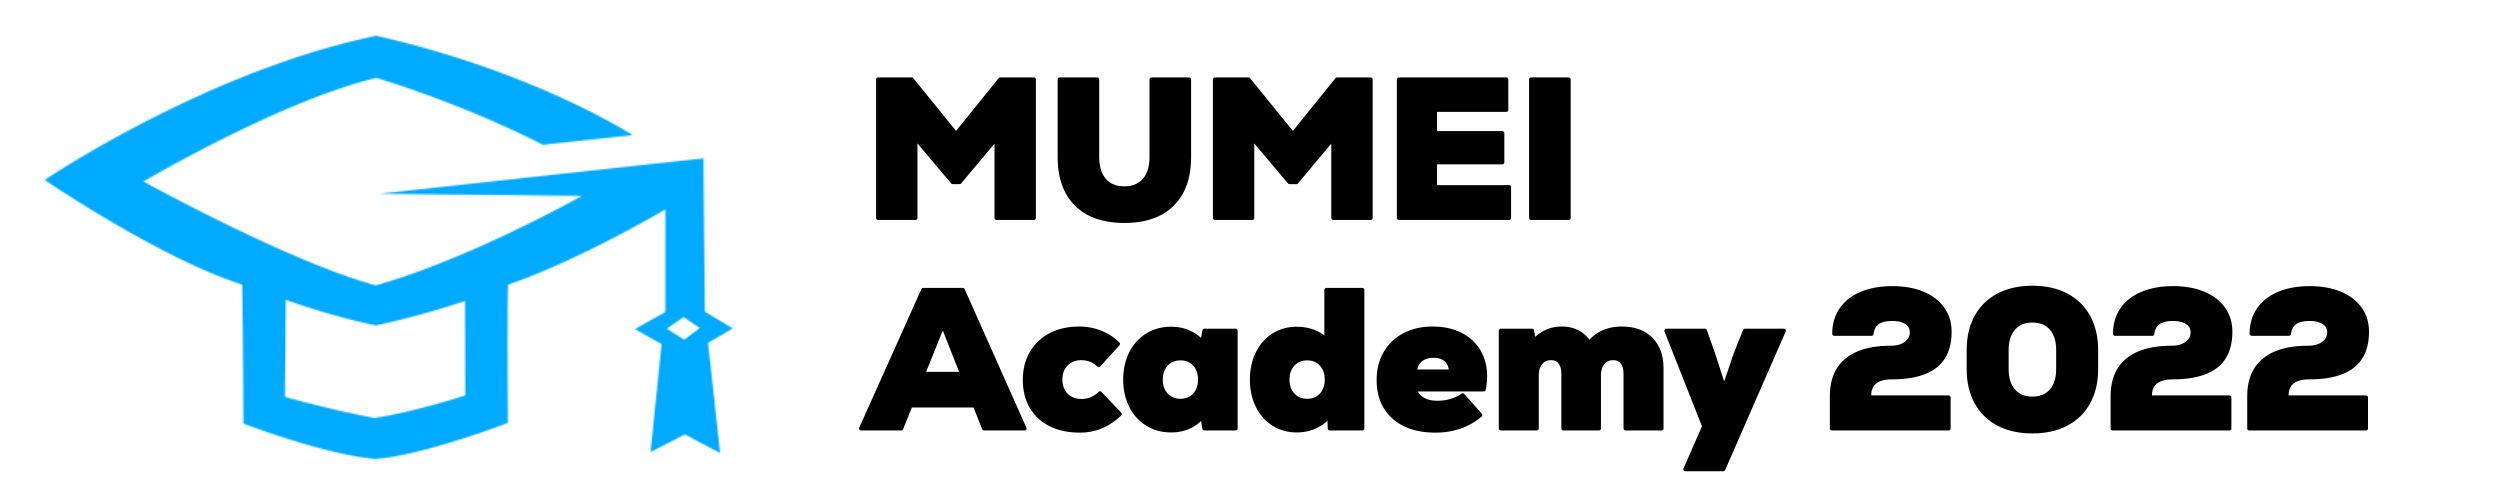 MUMEI Academy 2022